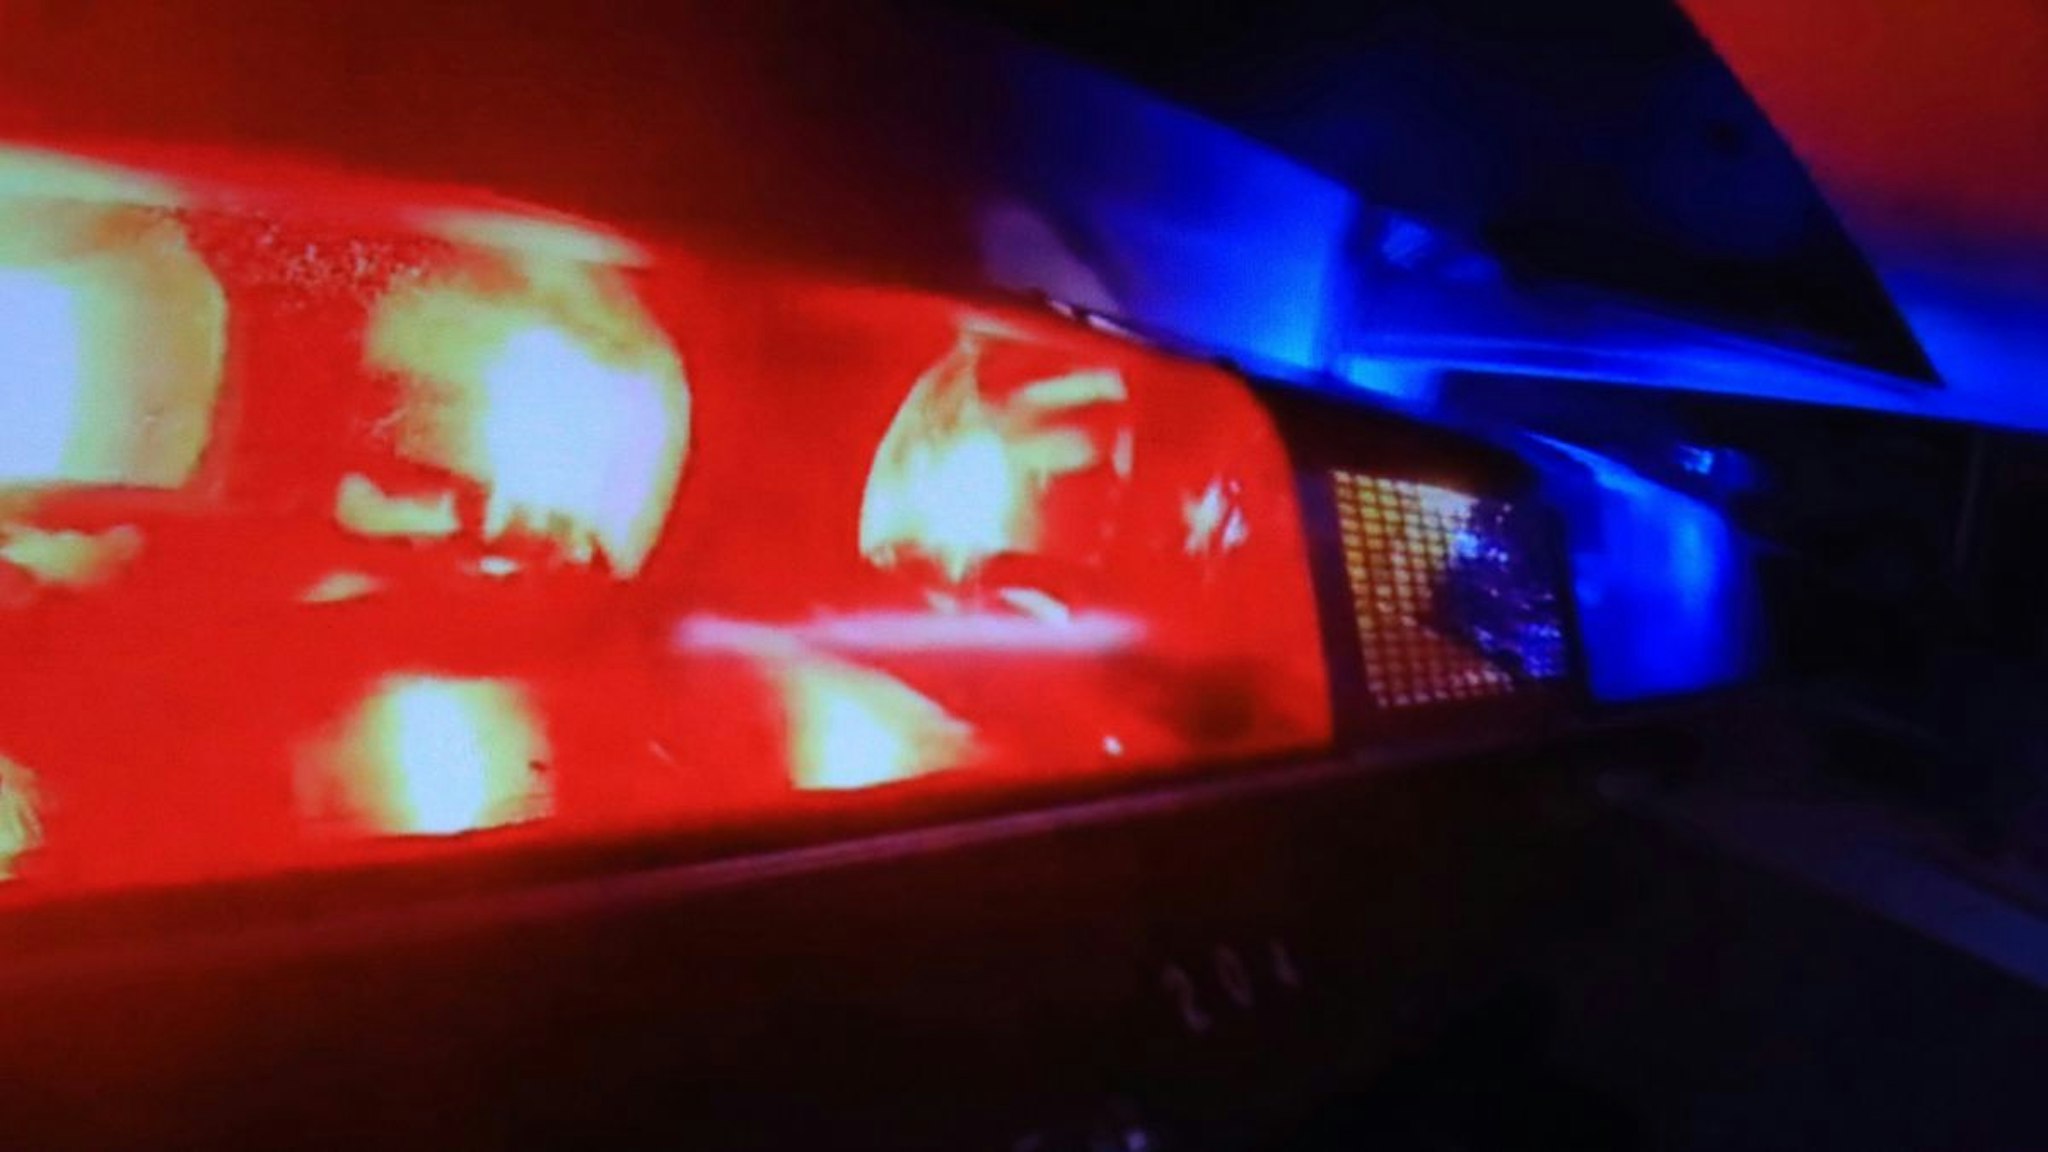 Emergency lights on a police car flashing - stock photo